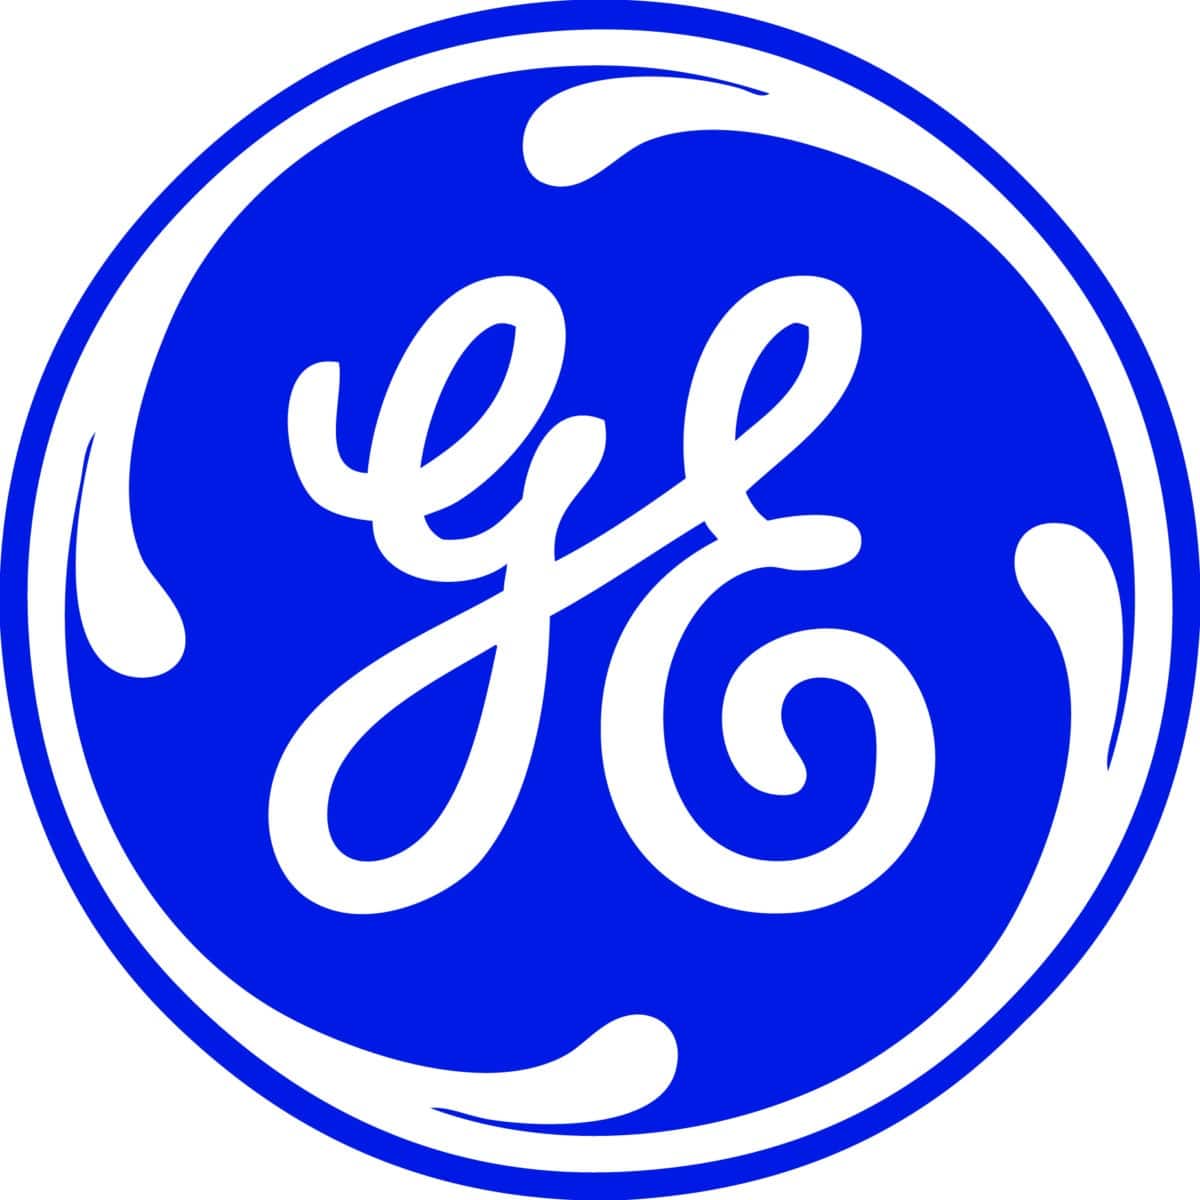 Blue General Electric logo.